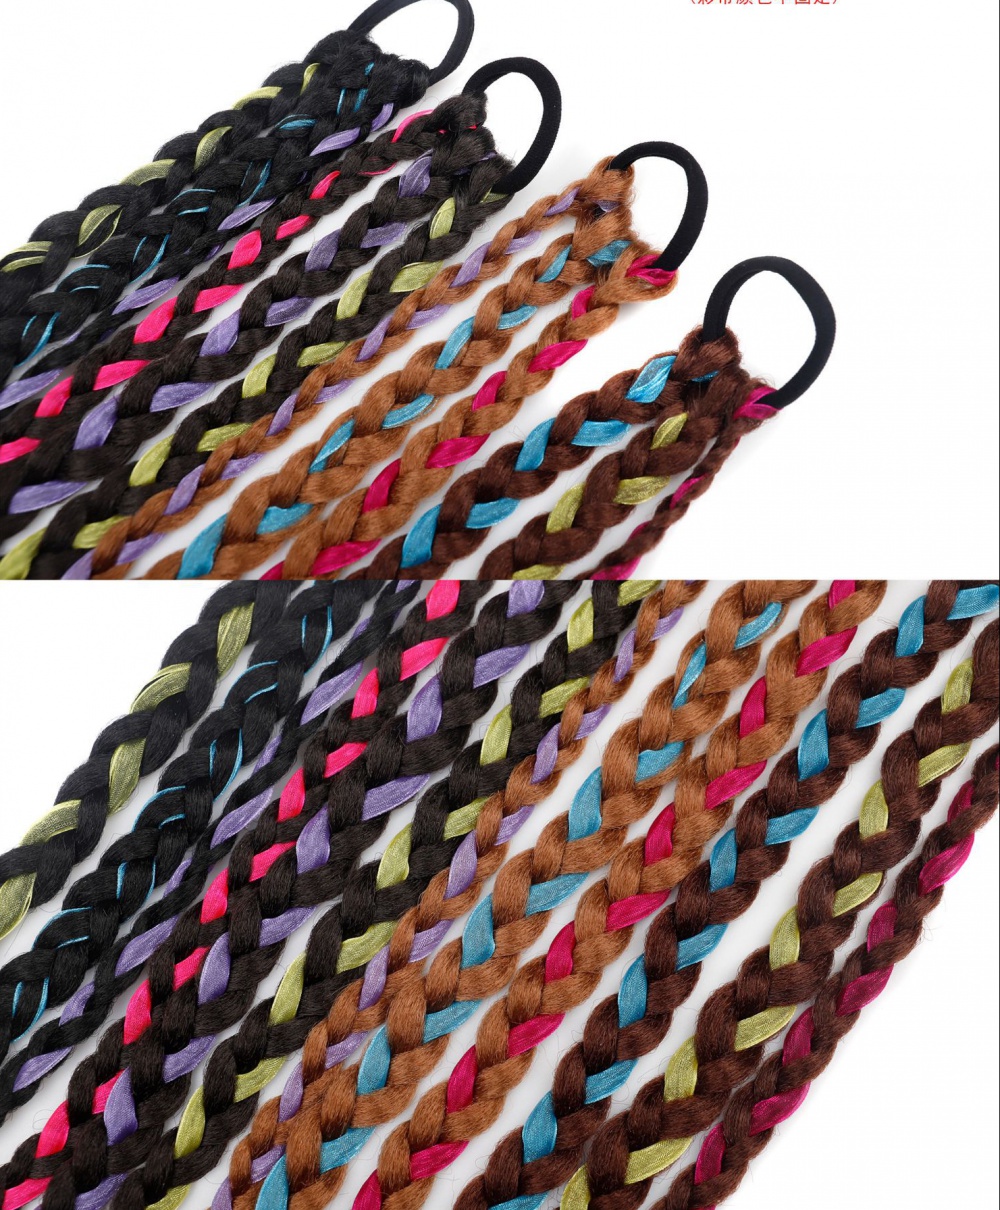 Colors horsetail wig European style braid